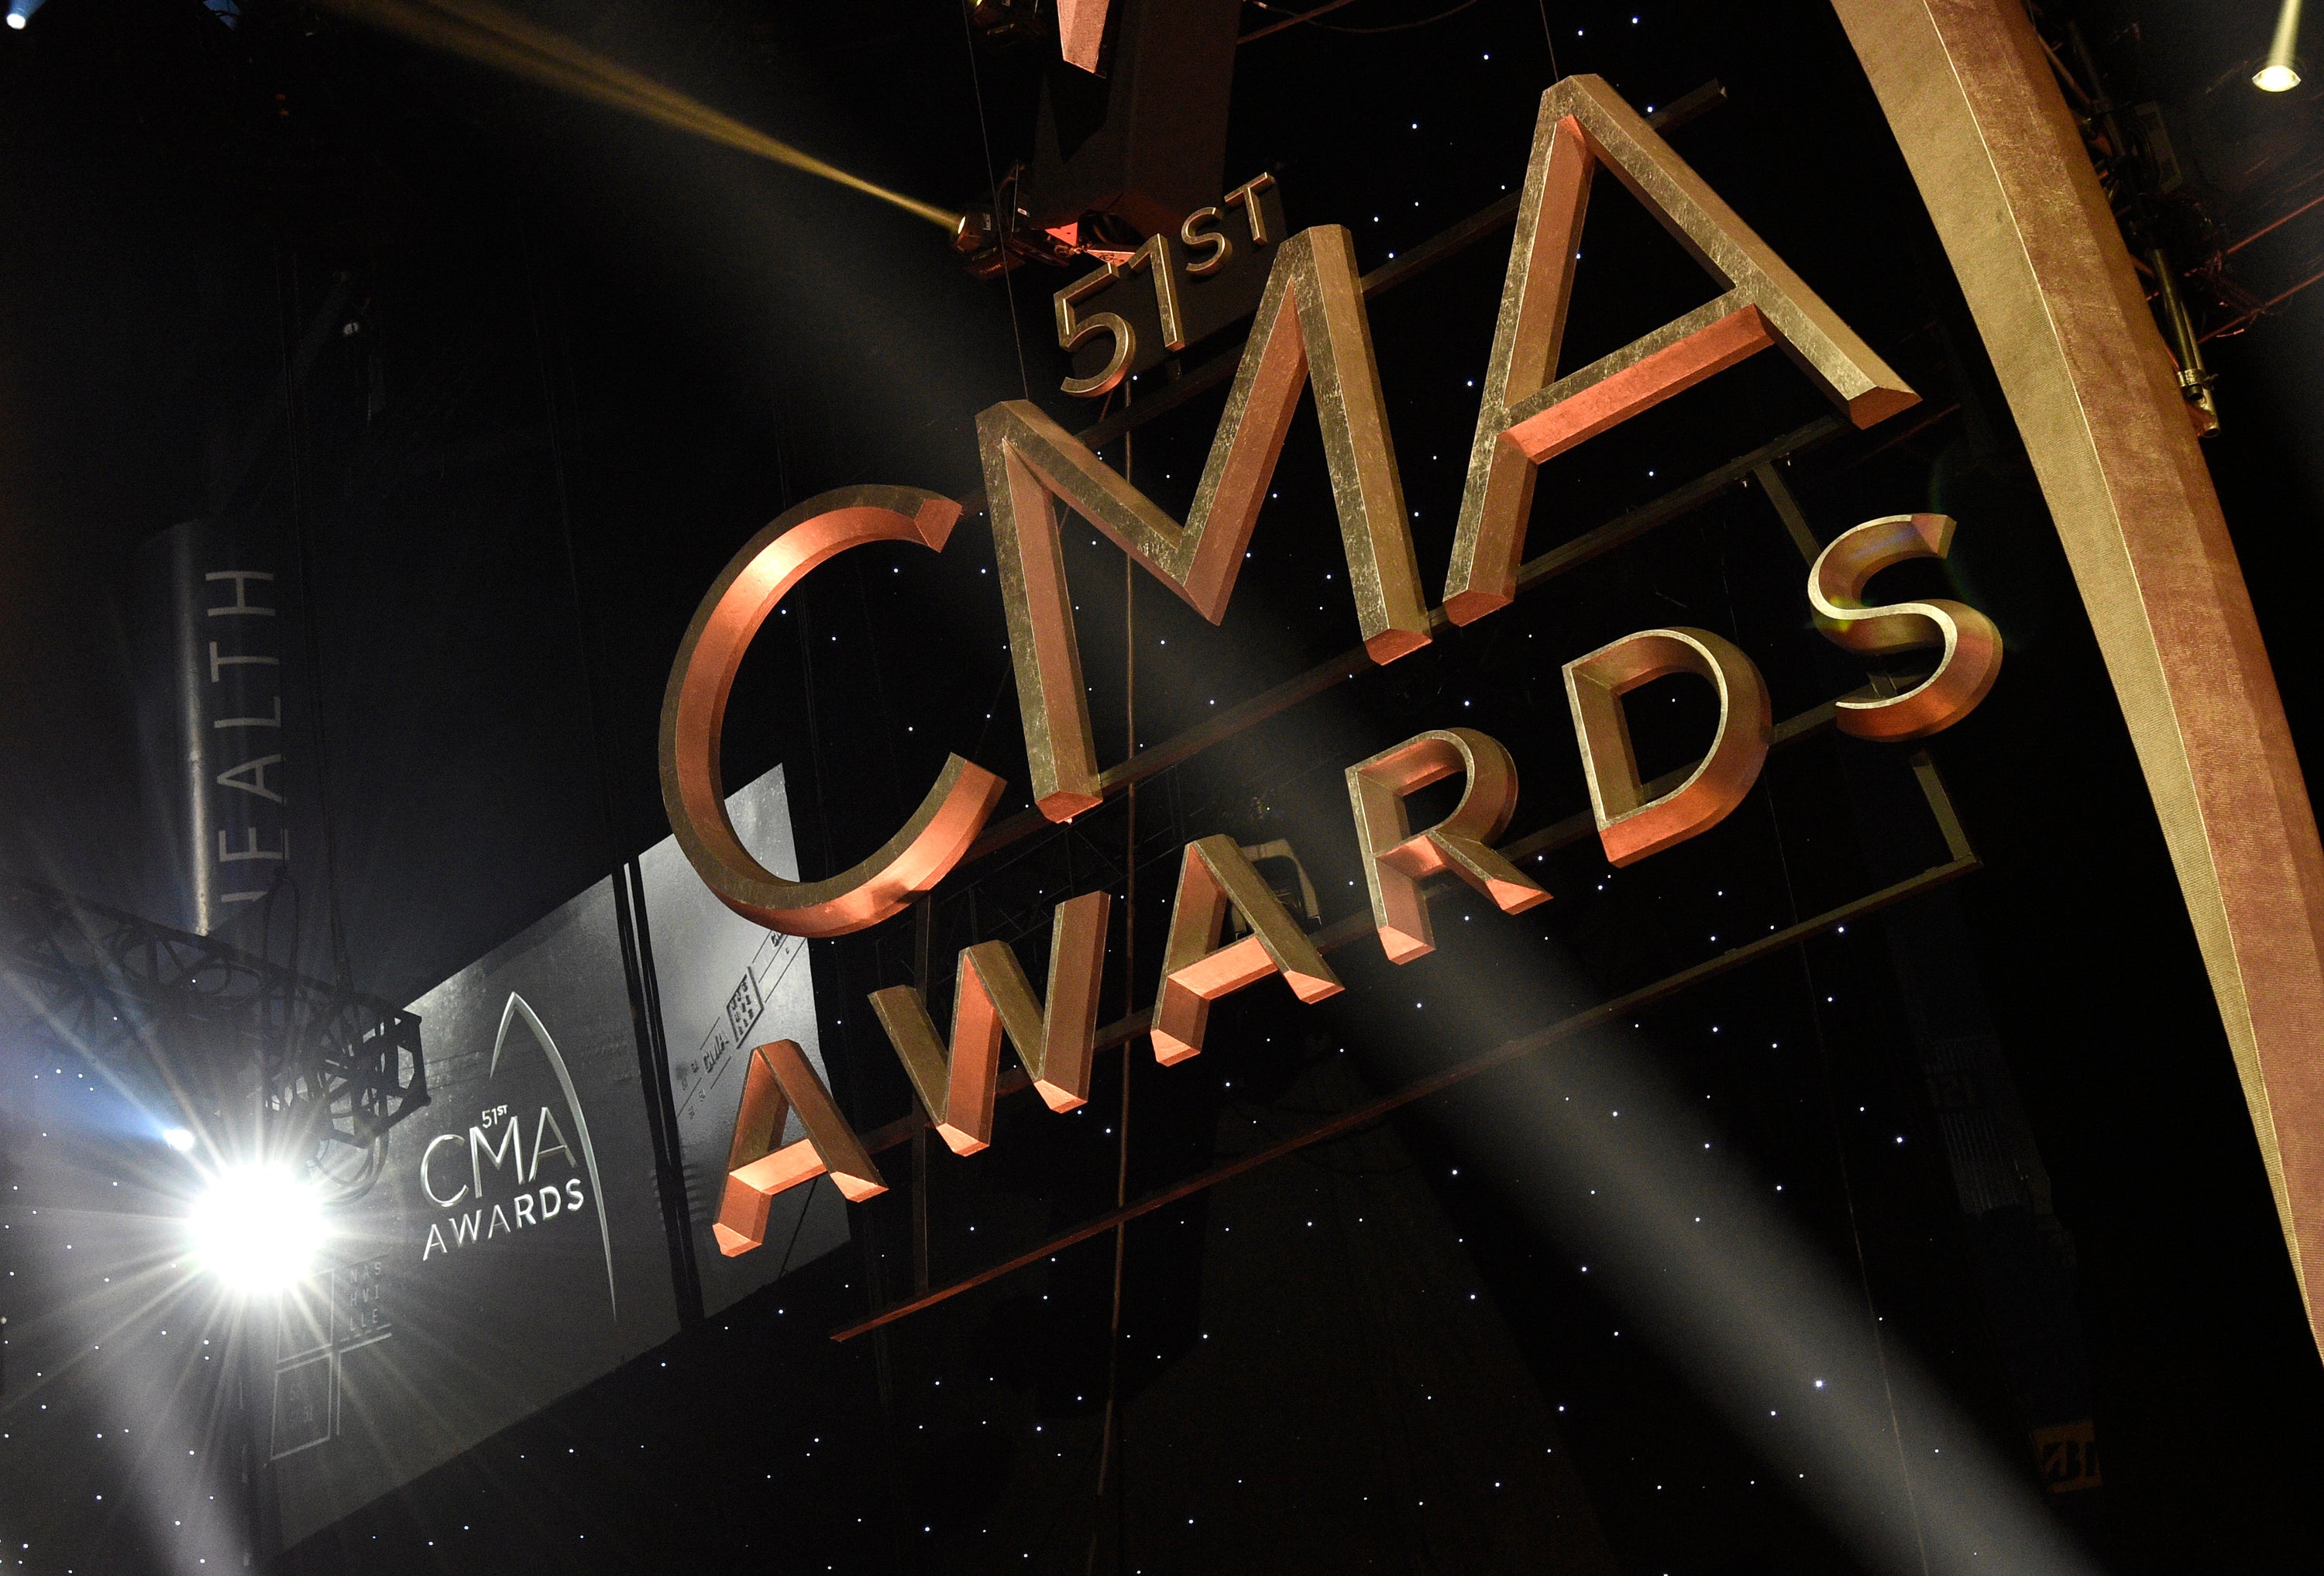 Music CMA Awards